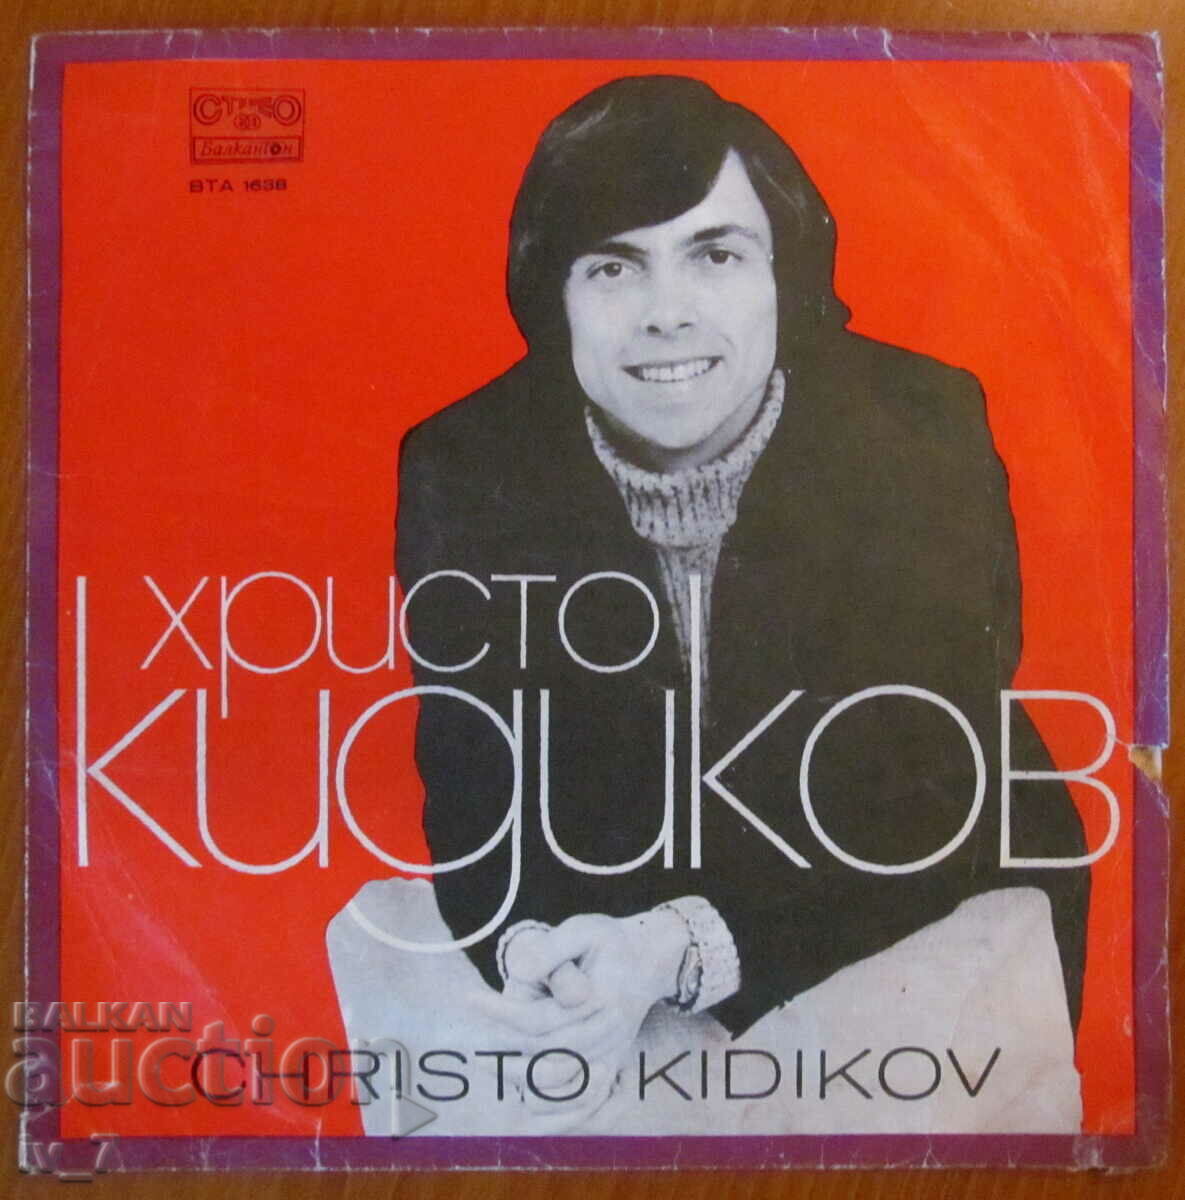 RECORD - HRISTO KIDIKOV, μεγάλου σχήματος